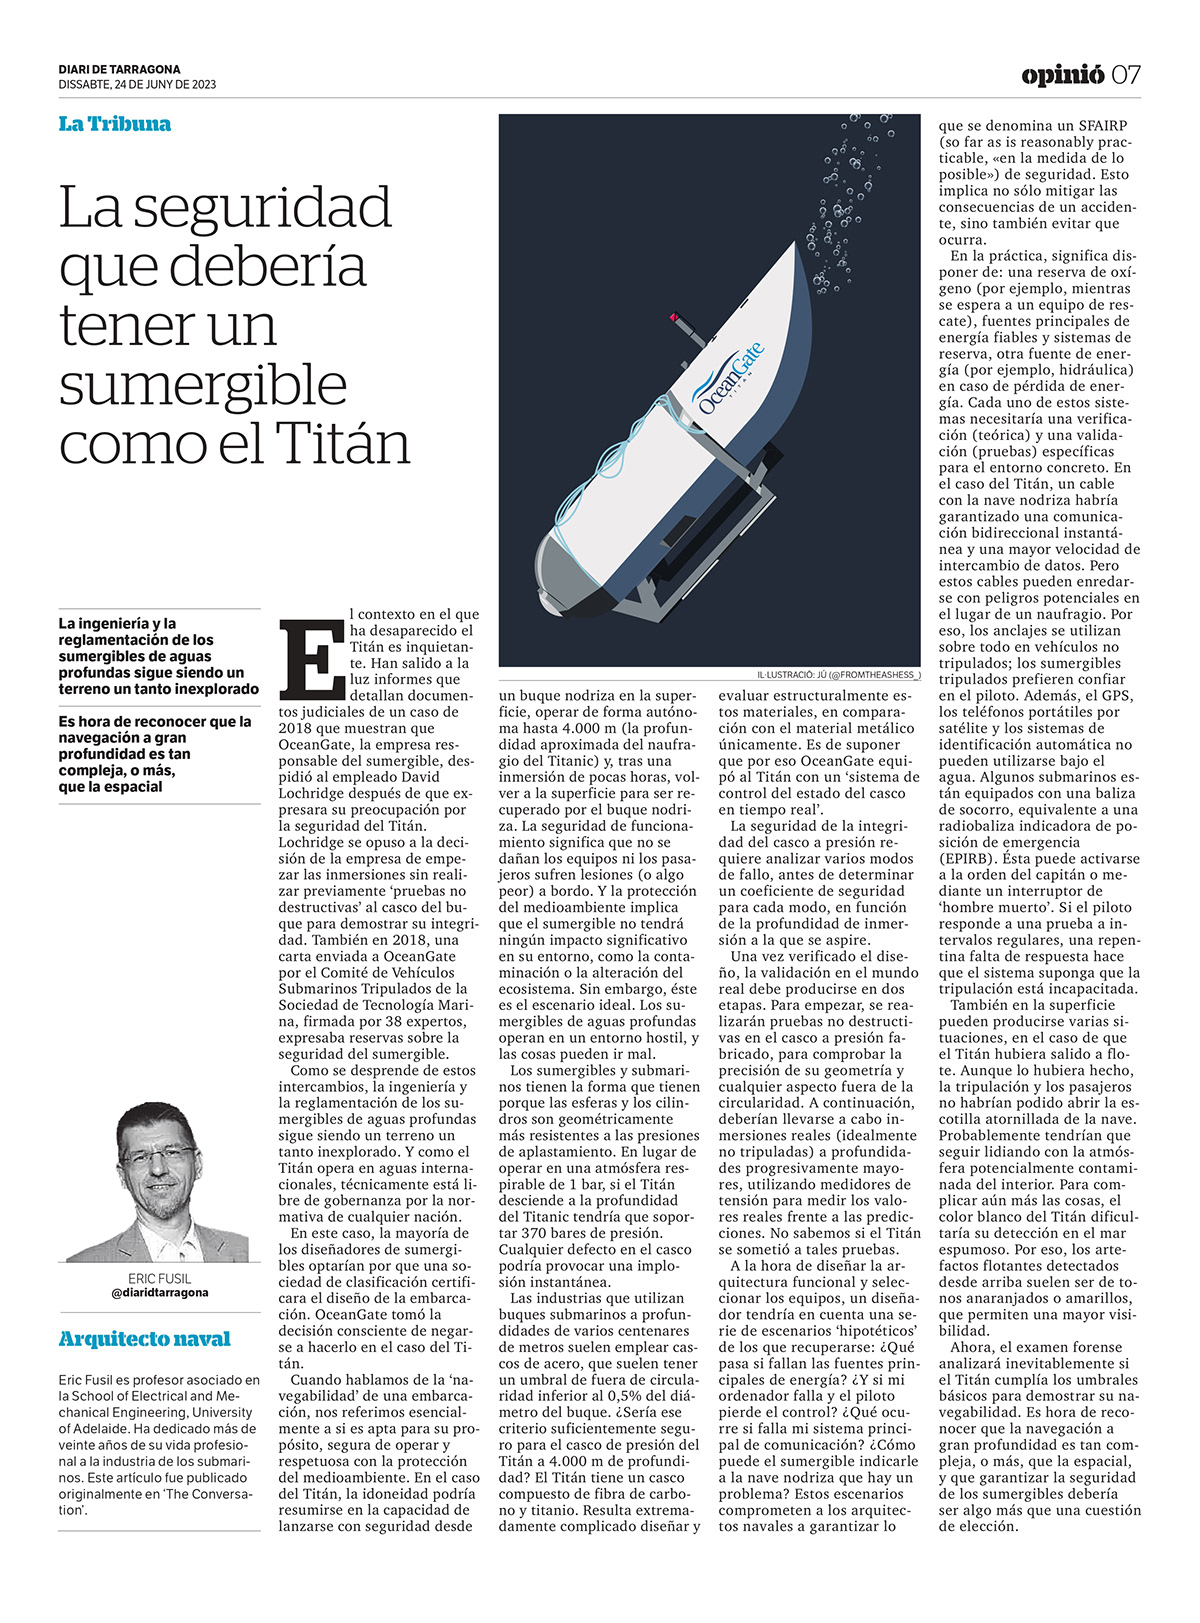 Titan OceanGate submarine submarino ilustracion newspaper periodico newspaperillustration ilustracionperiodistica titanic